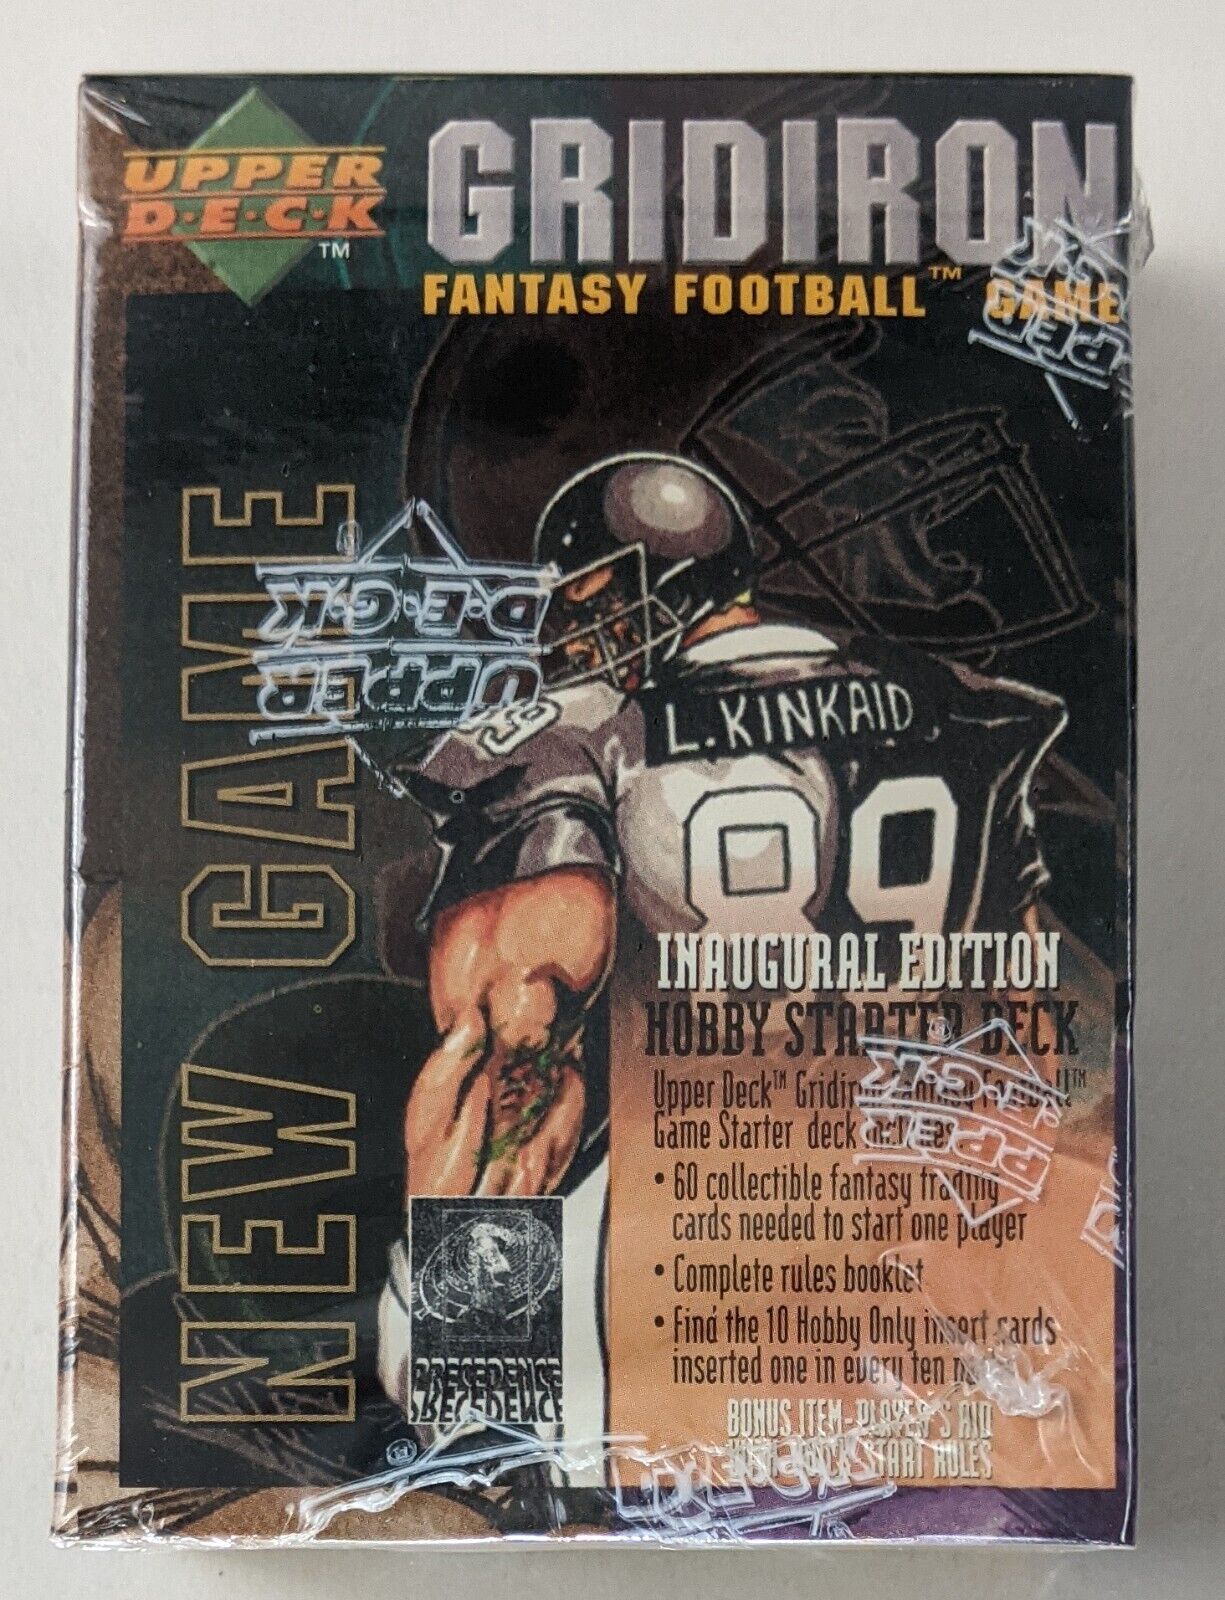 1995 Gridiron Fantasy Football Game Inaugural Edition Hobby Starter Deck Box - Miraj Trading